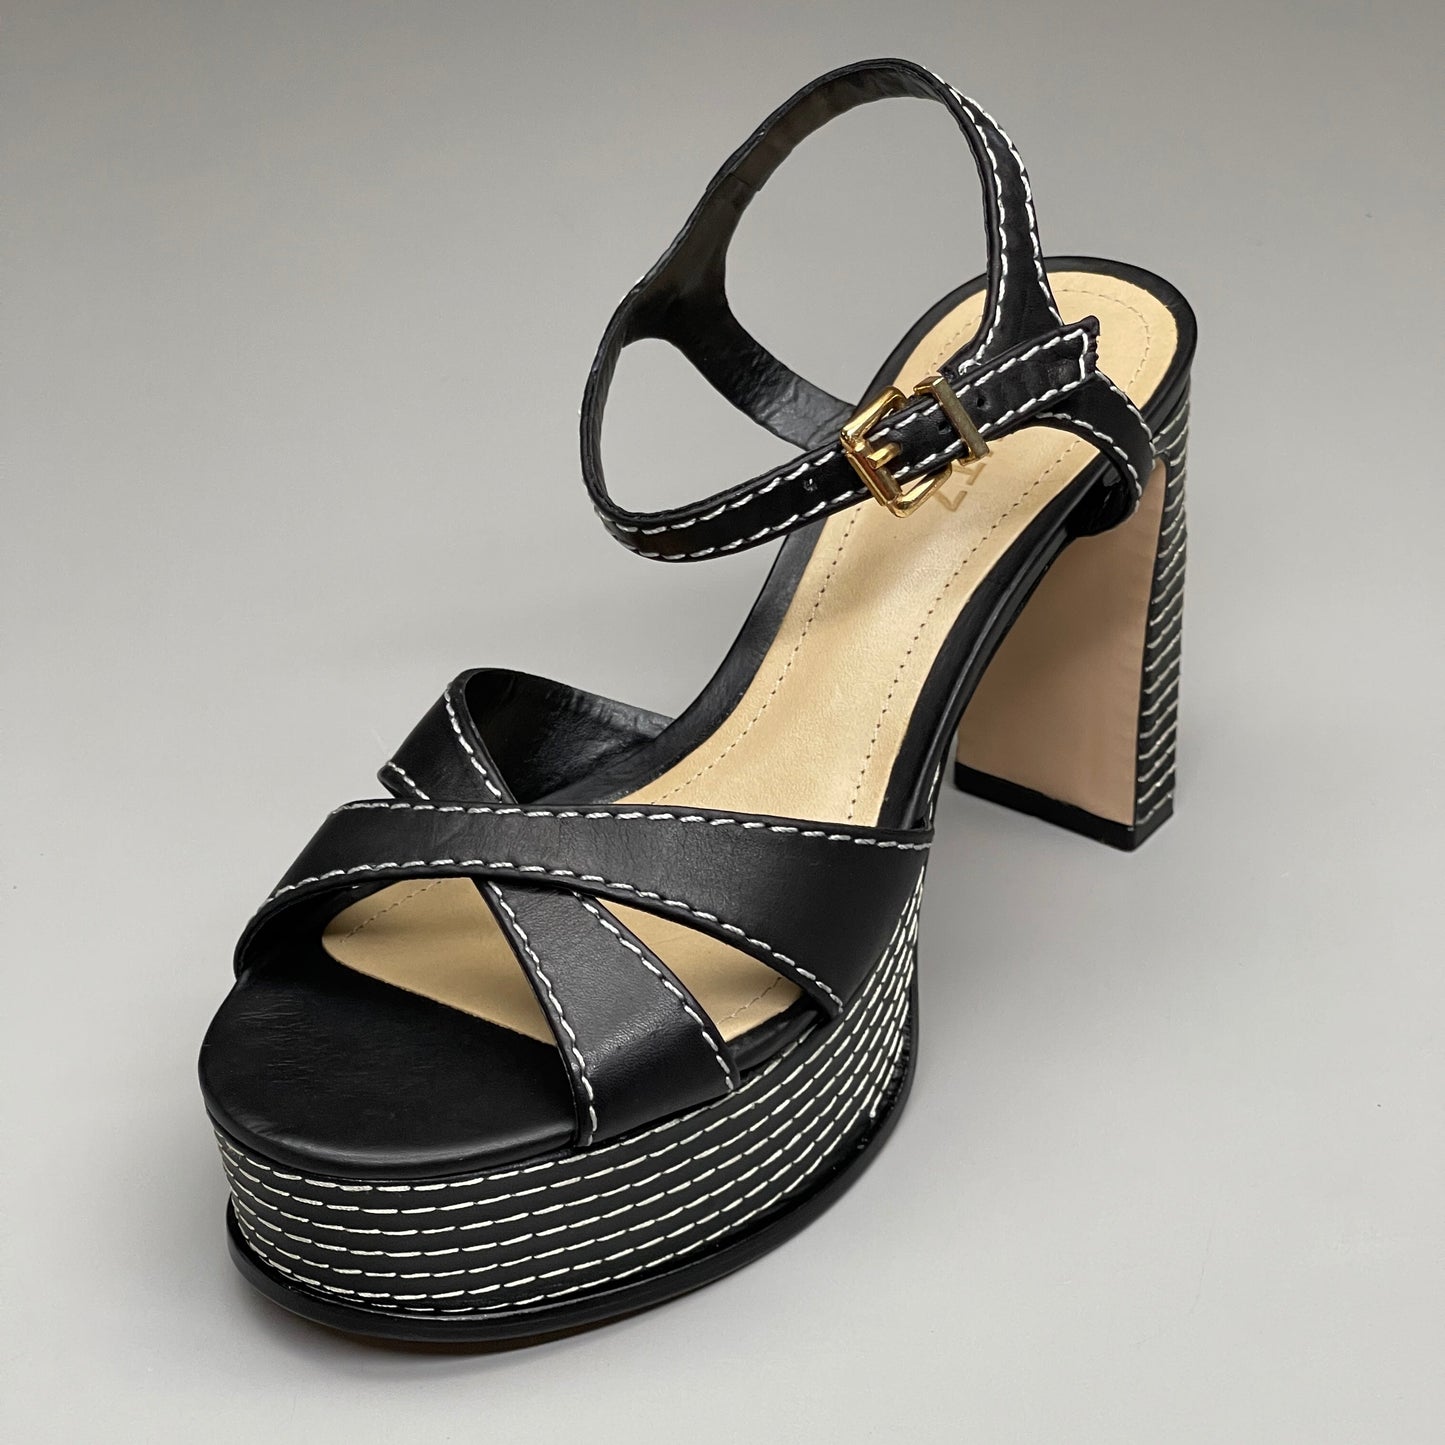 SCHUTZ Keefa Casual Women's Leather Sandal Black Platform 4" Heel Shoes Sz 10.5B (New)